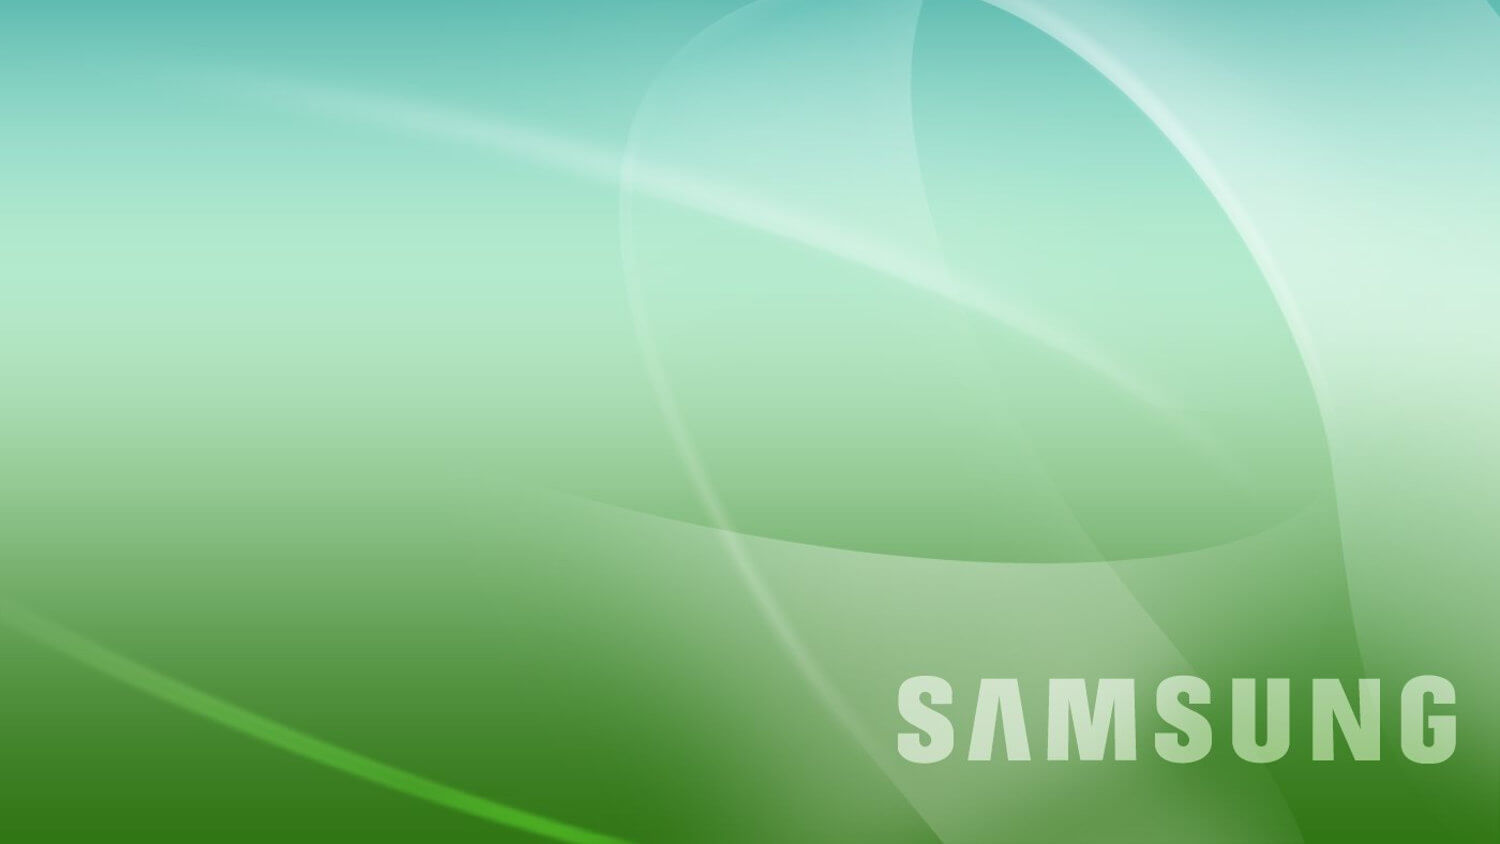 Фото и характеристики якобы Samsung Galaxy A5 и A3 (2015). Фото.